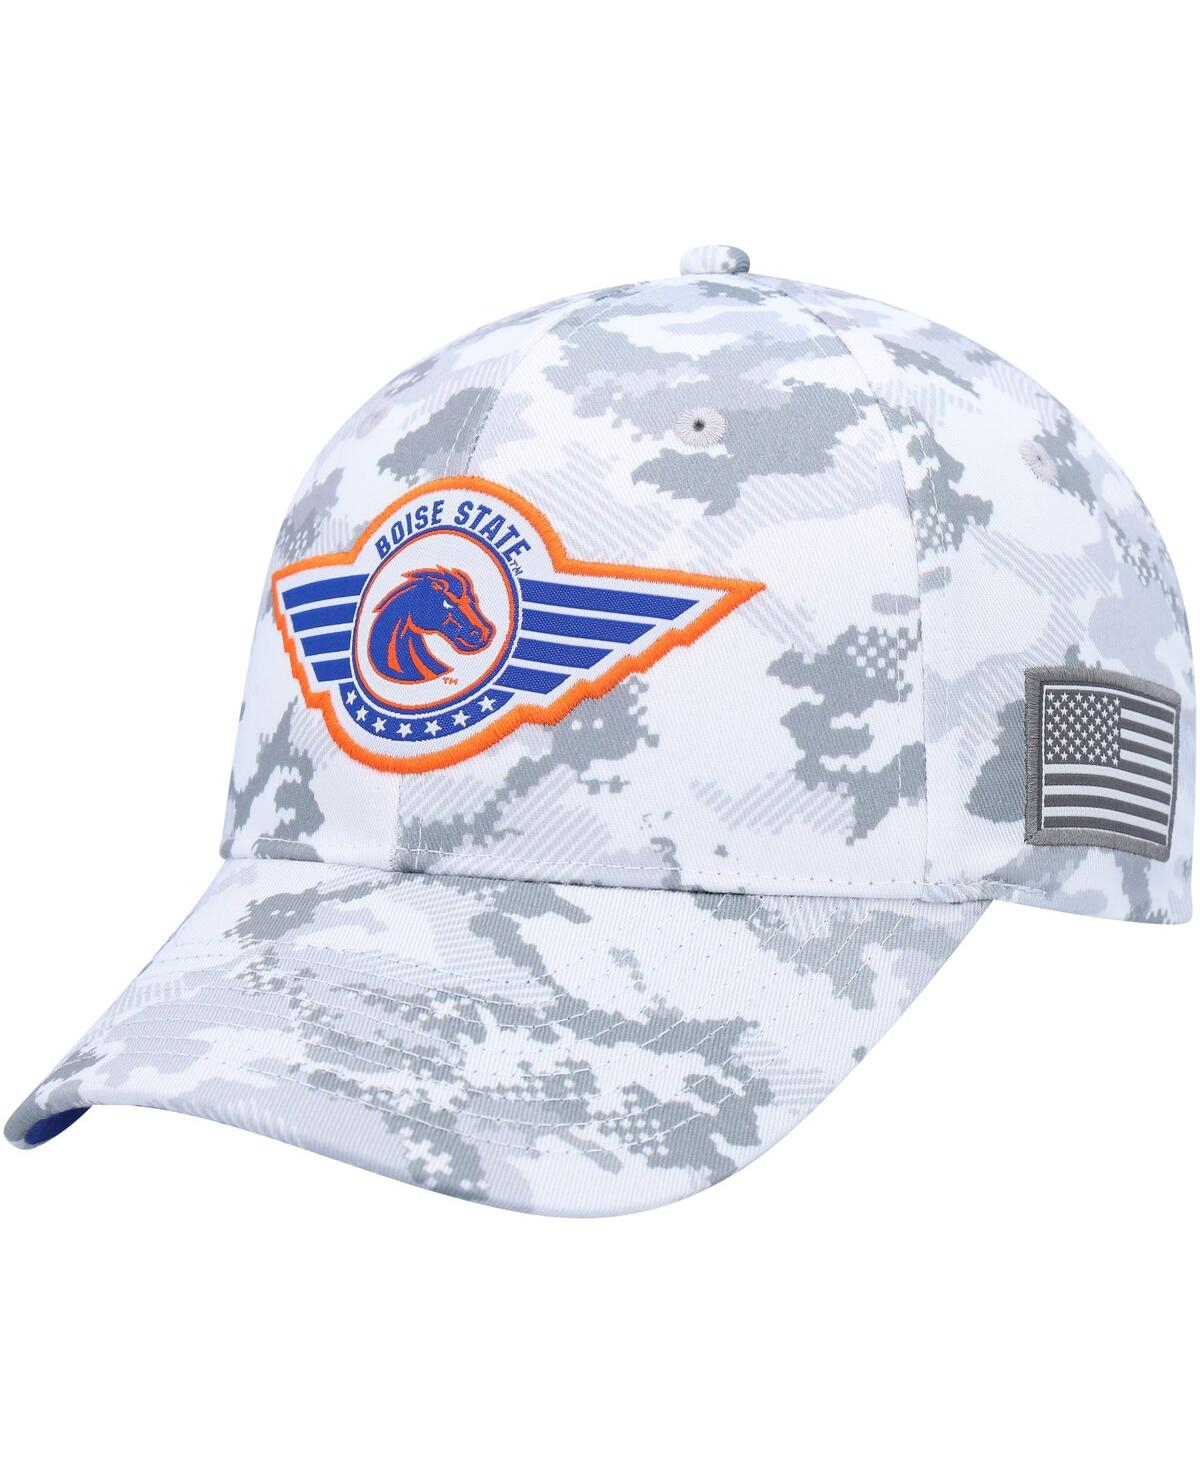 Men's Colosseum Camo Boise State Broncos Oht Military-Inspired Appreciation Snapback Hat - Camo